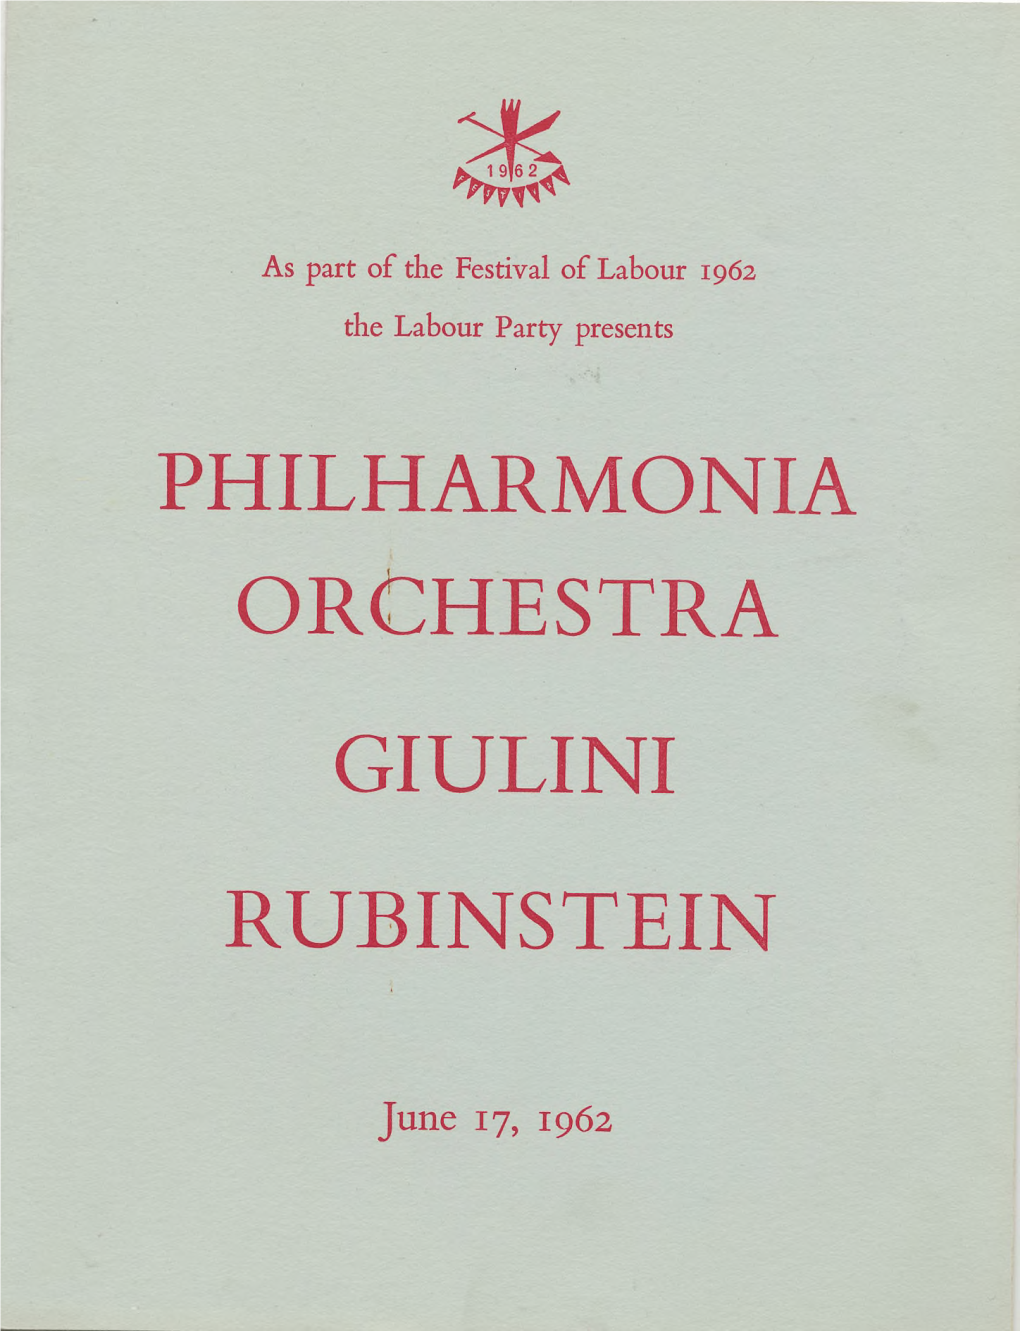 Philharmonia Orchestra Giulini Rubinstein